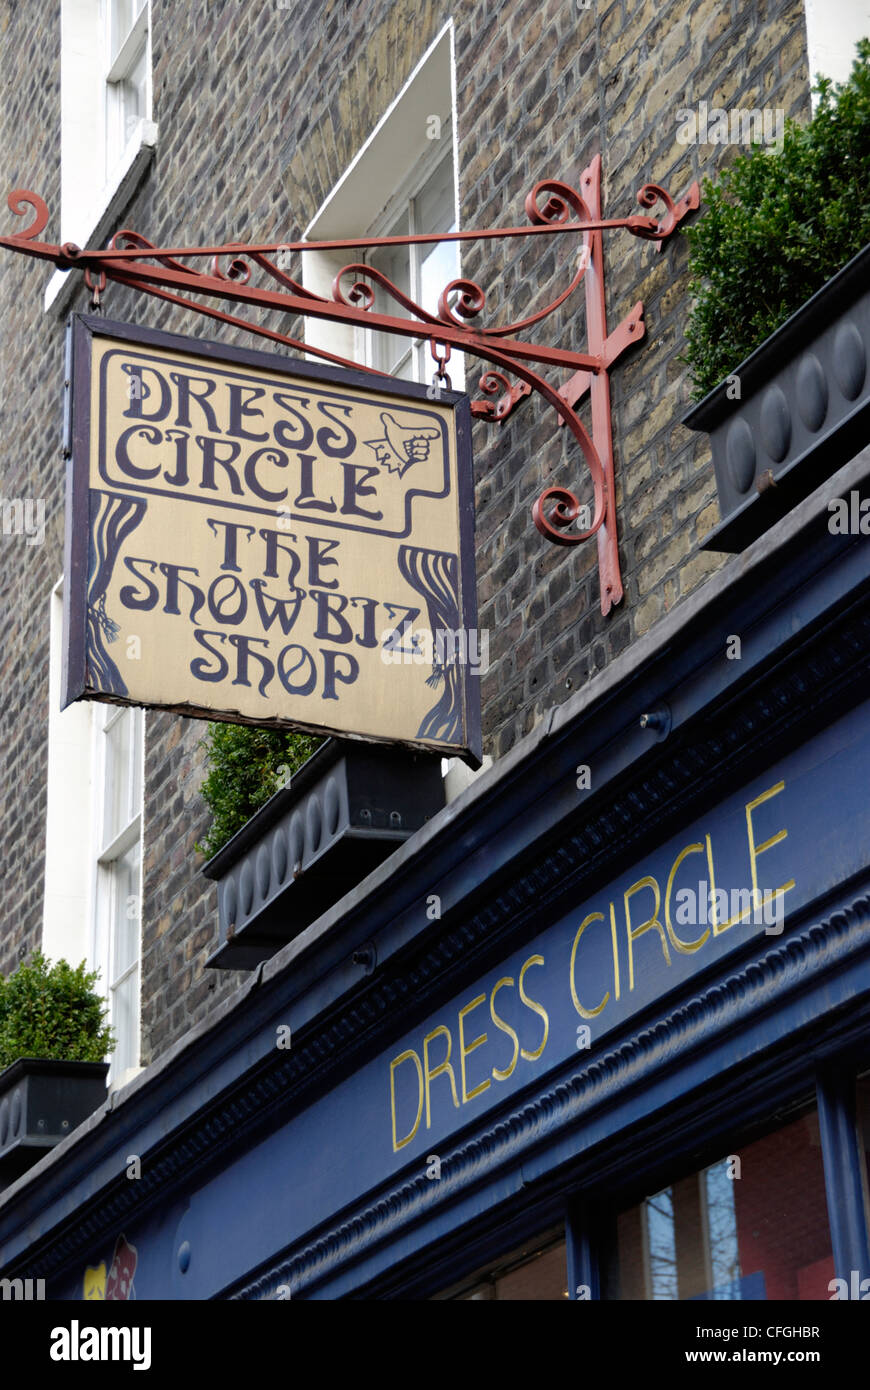 Dress Circle showbiz shop in Covent Garden di Londra, Inghilterra Foto Stock